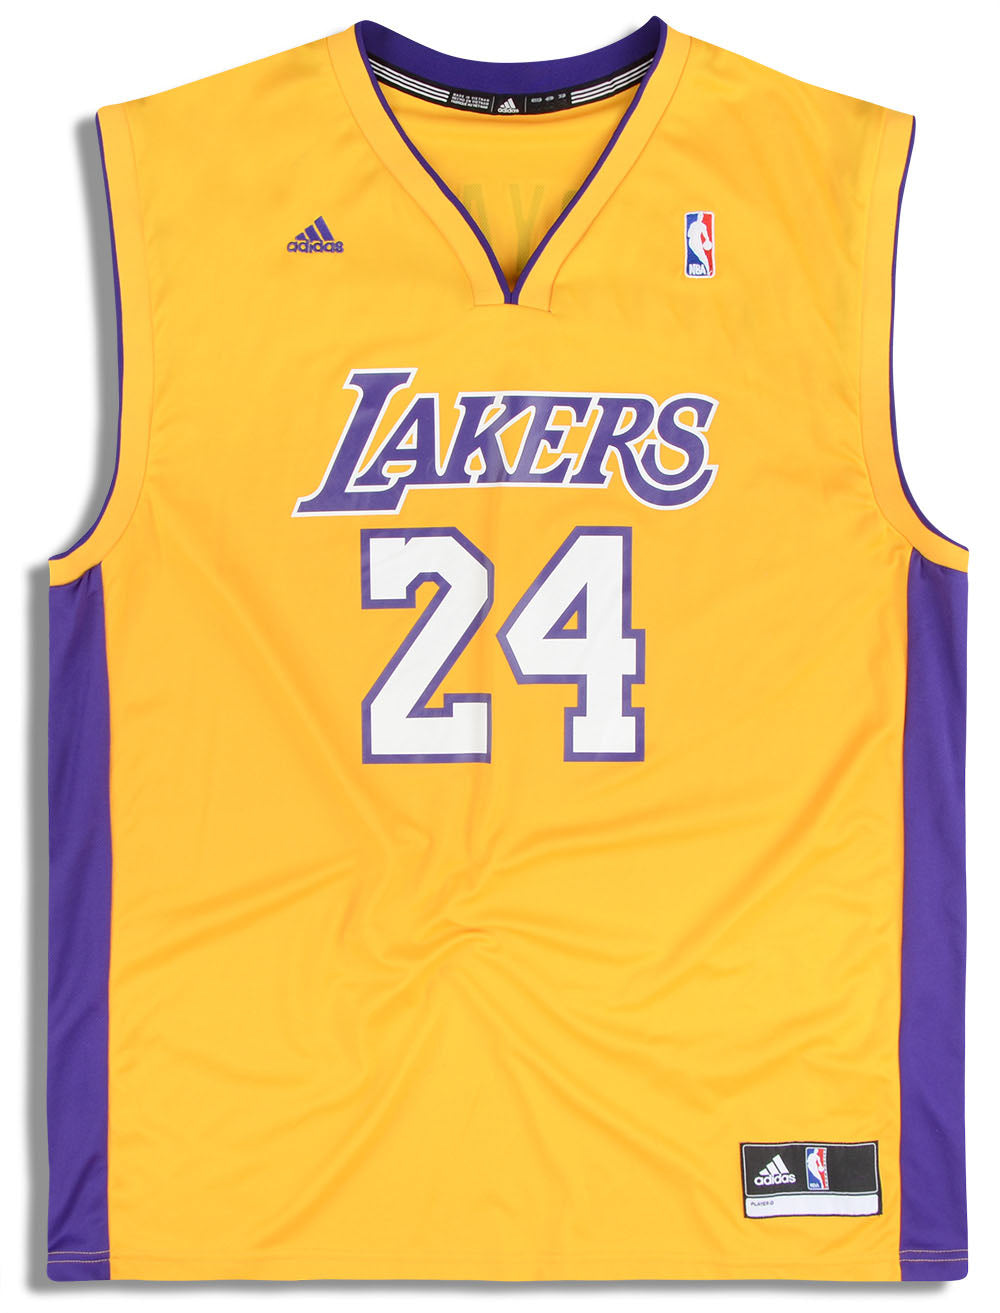 Adidas ADIDAS Kobe Bryant #24 Lakers NBA Jersey Shirt